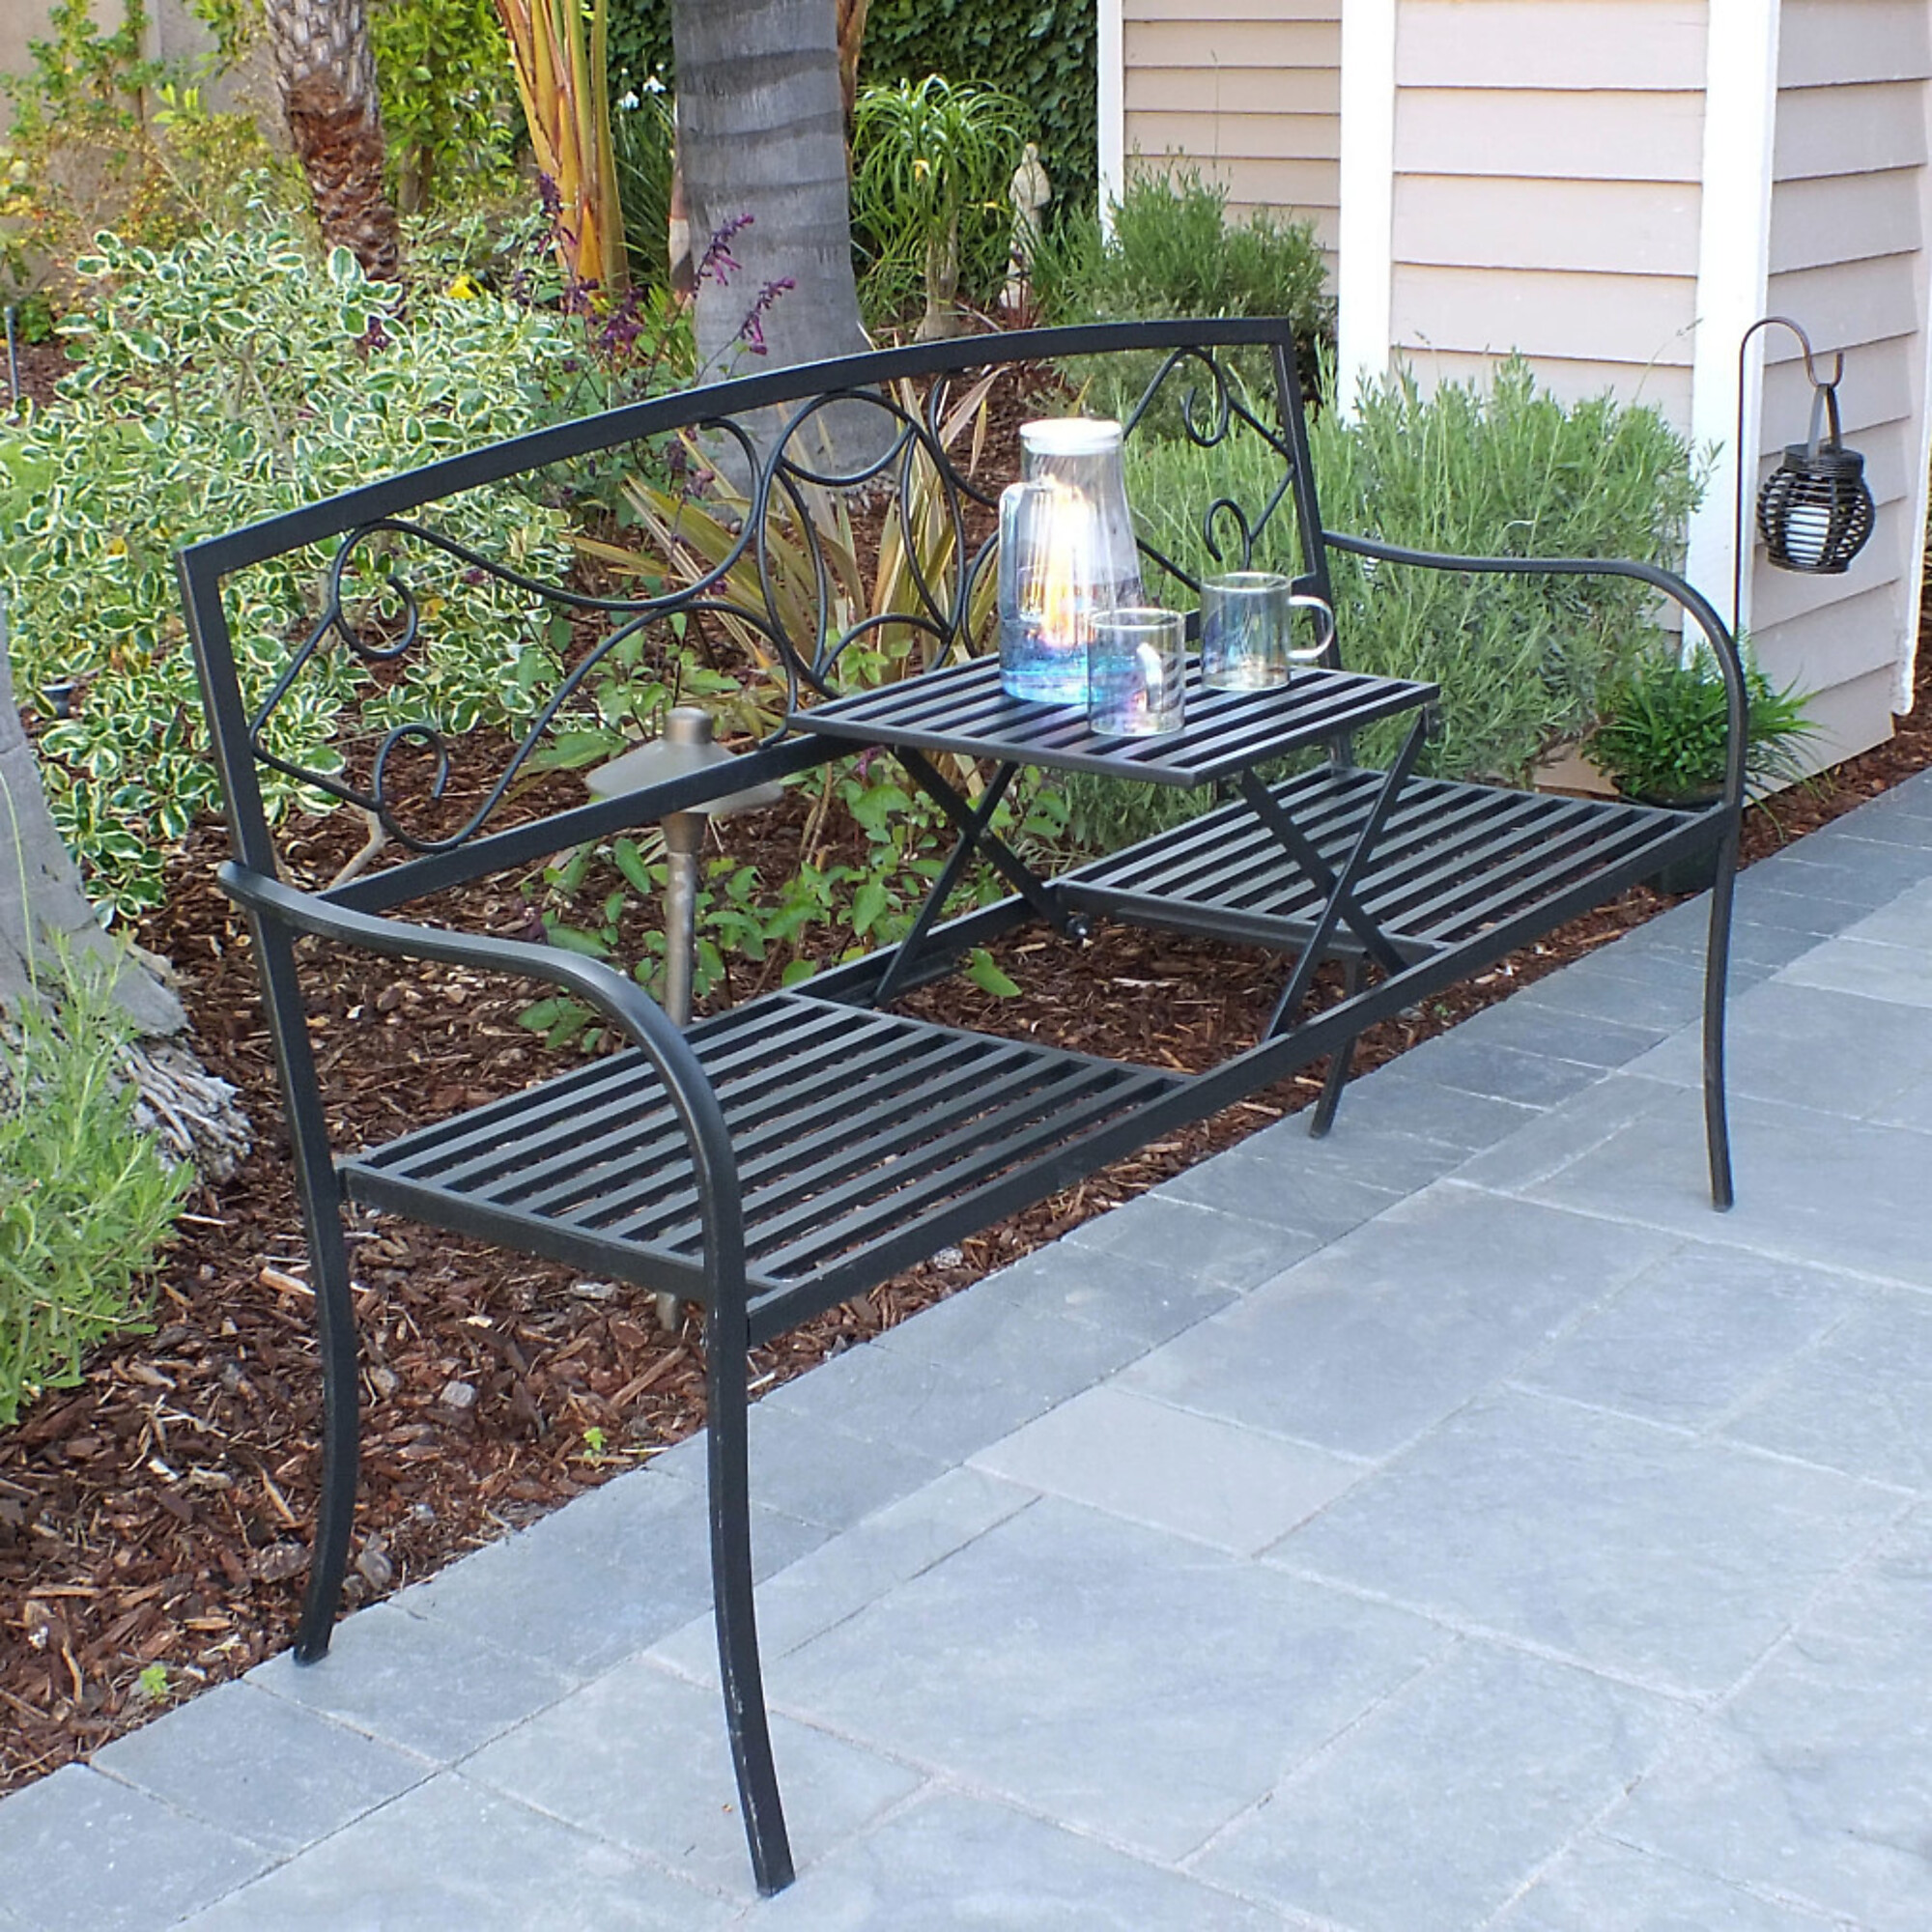 Alpine Corporation, Metal Garden Bench with Retractable Table, Primary Color Black, Material Metal, Width 21 in, Model VTFAM114